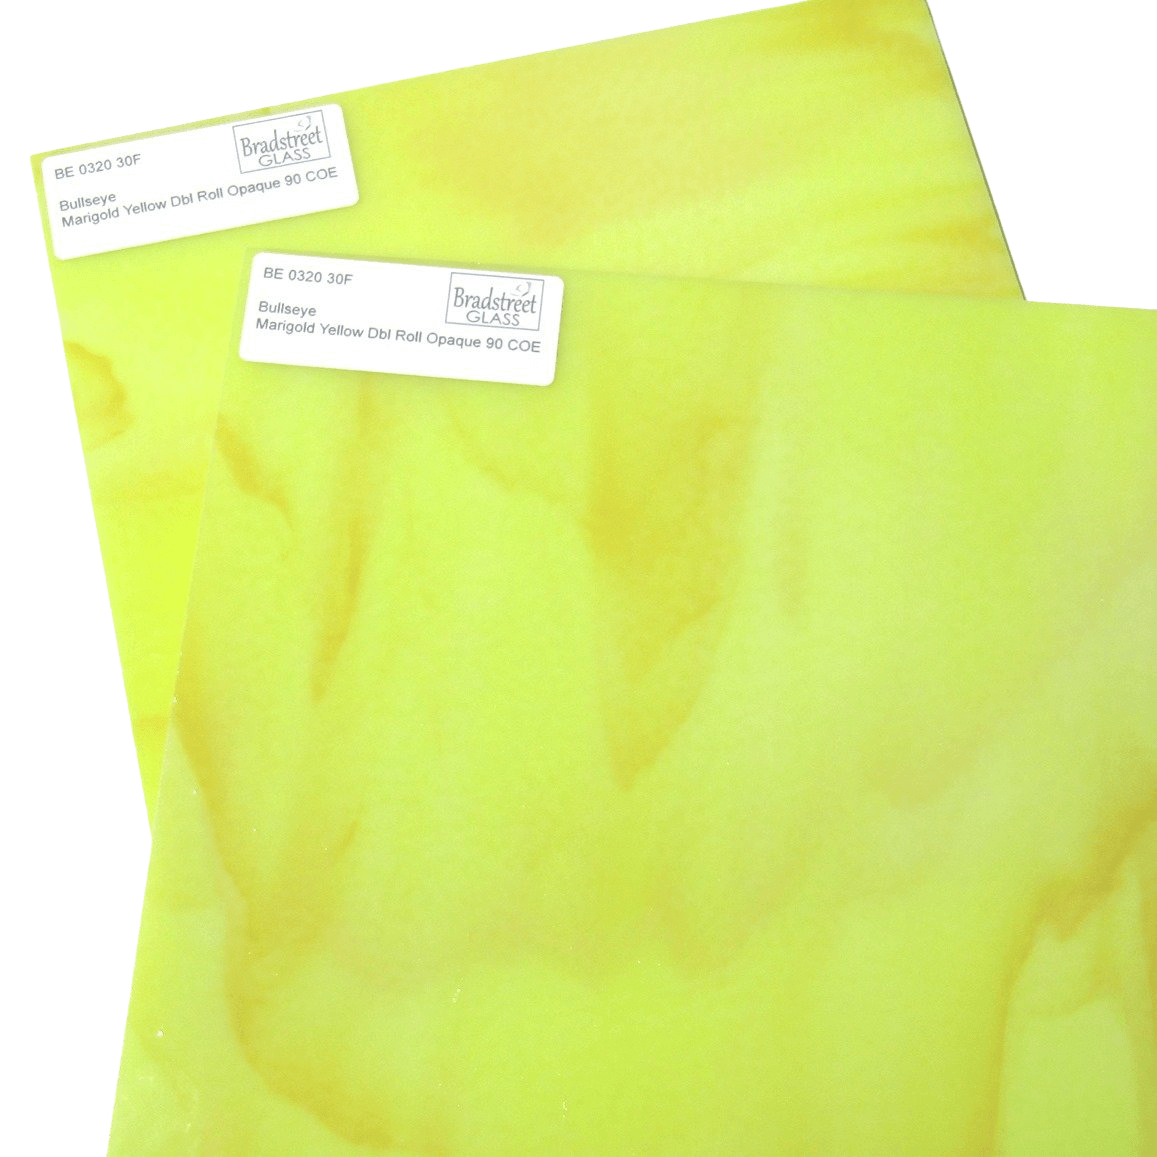 Marigold Yellow Stained Glass Sheet Fusible 90 COE Bullseye 0320 30F